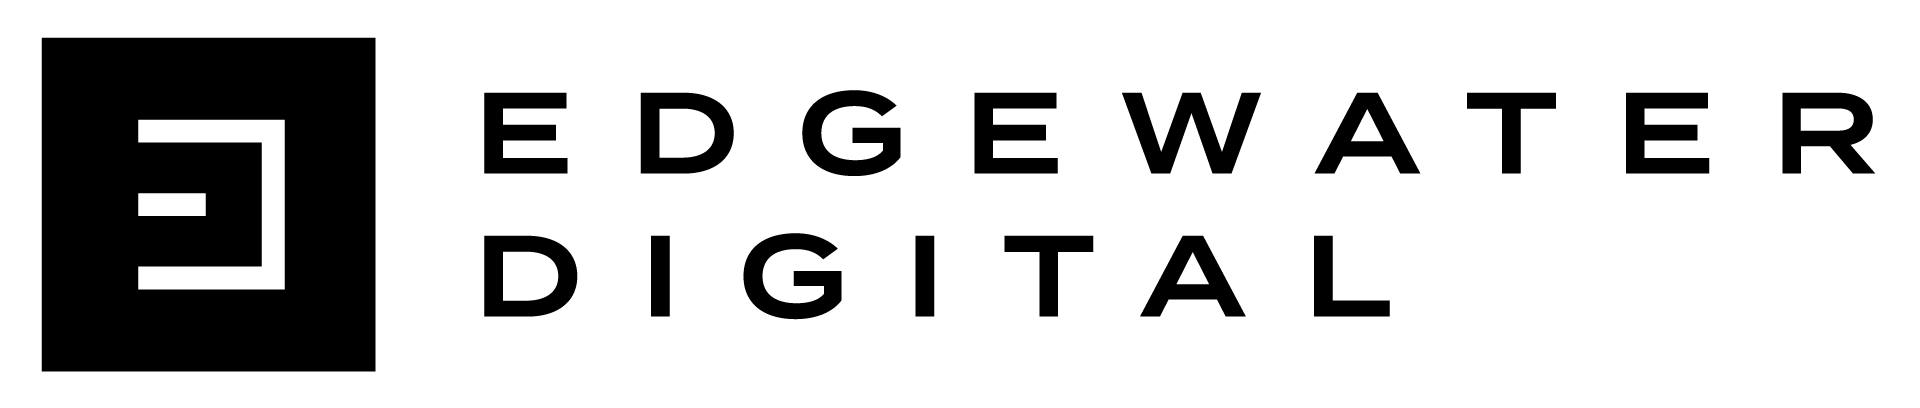 Edgewater Logo - Home - Edgewater Digital